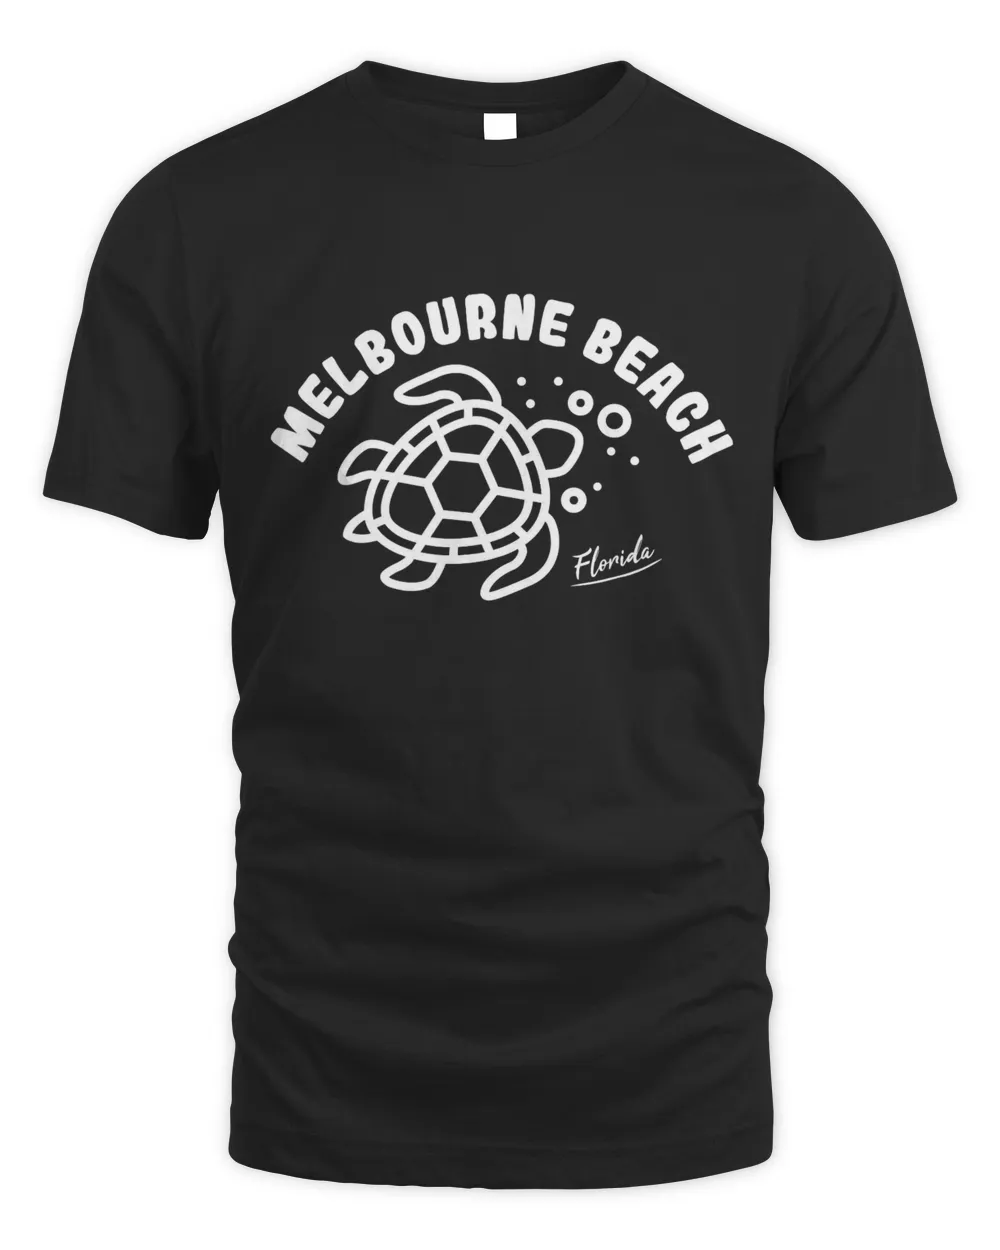 Melbourne Beach Florida Sea Turtle Souvenir T-Shirt